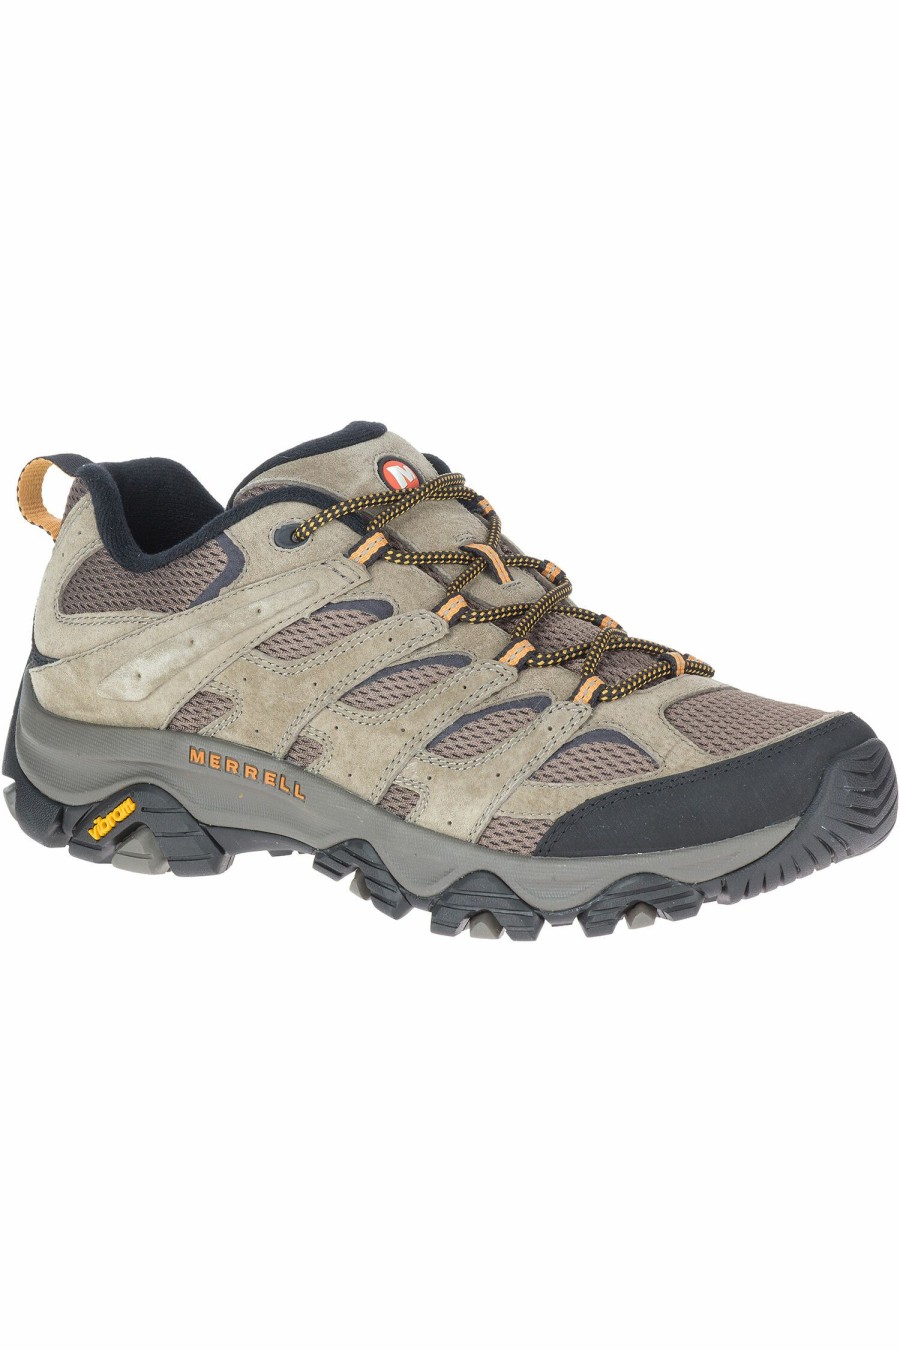 Mens Macpac Climbing | Merrell Men'S Moab 3 Ventilator Hiking Shoes ...